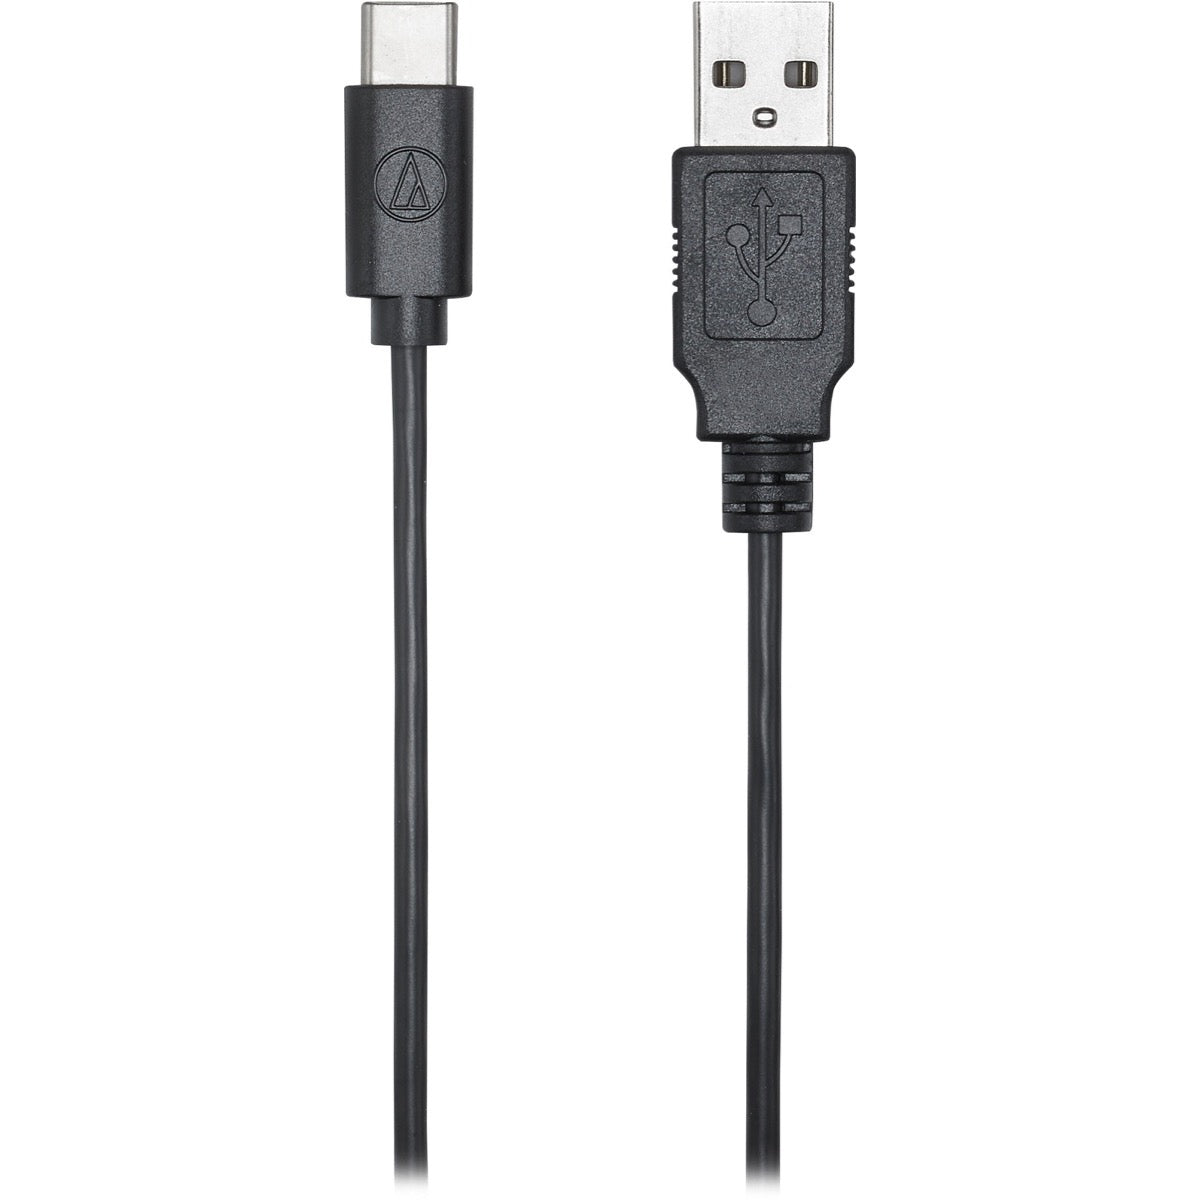 Audio-Technica ATR2500x-USB Condenser USB Microphone